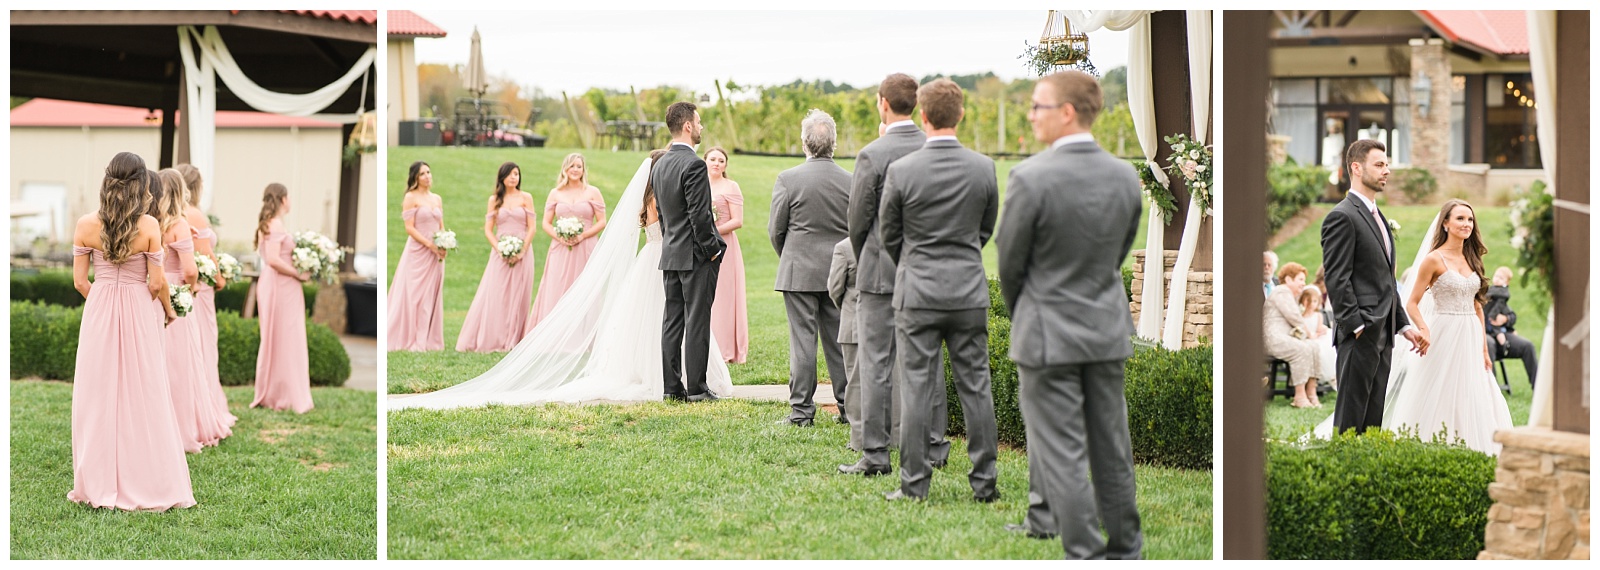 wedding ceremony images by jenn eddine photography, lexington, nc